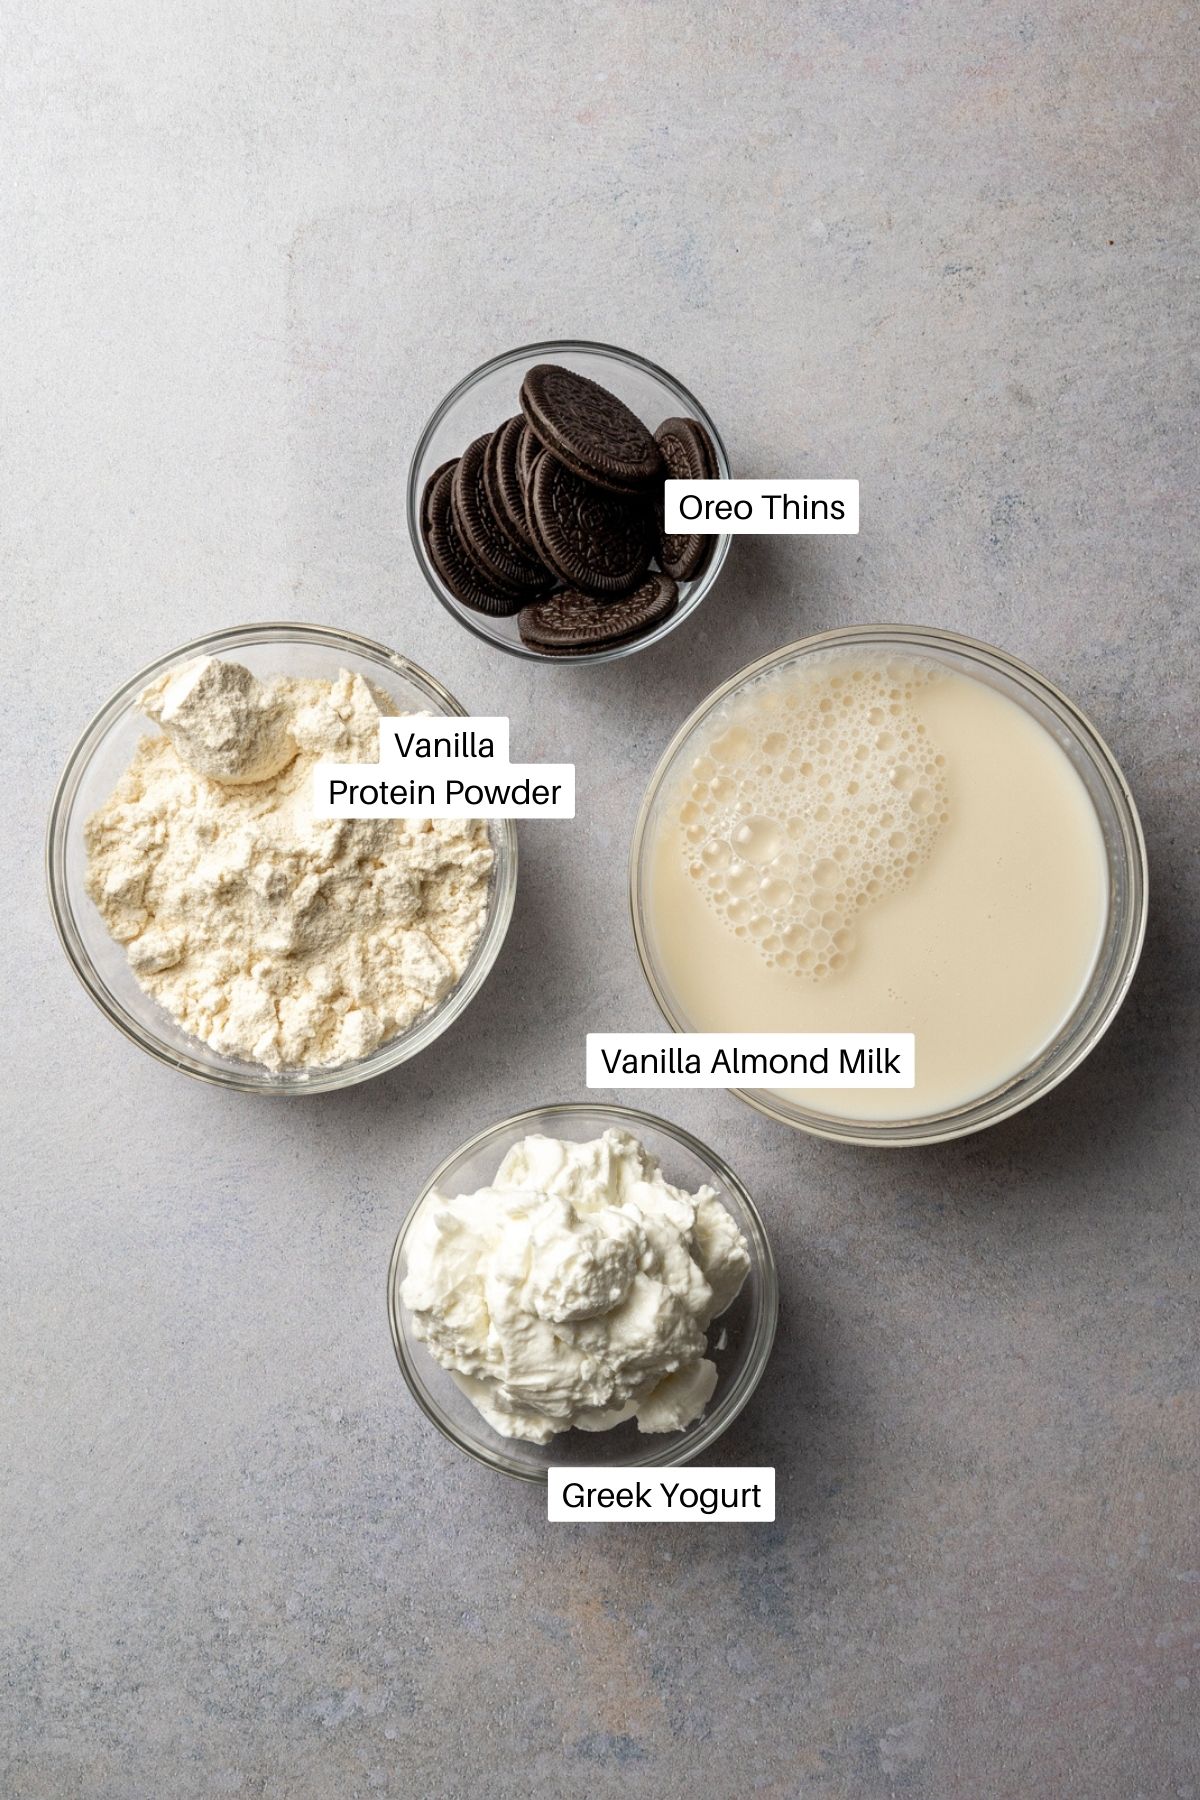 Vanilla almond milk, vanilla protein powder, Greek yogurt, and Oreo thins on a counter.